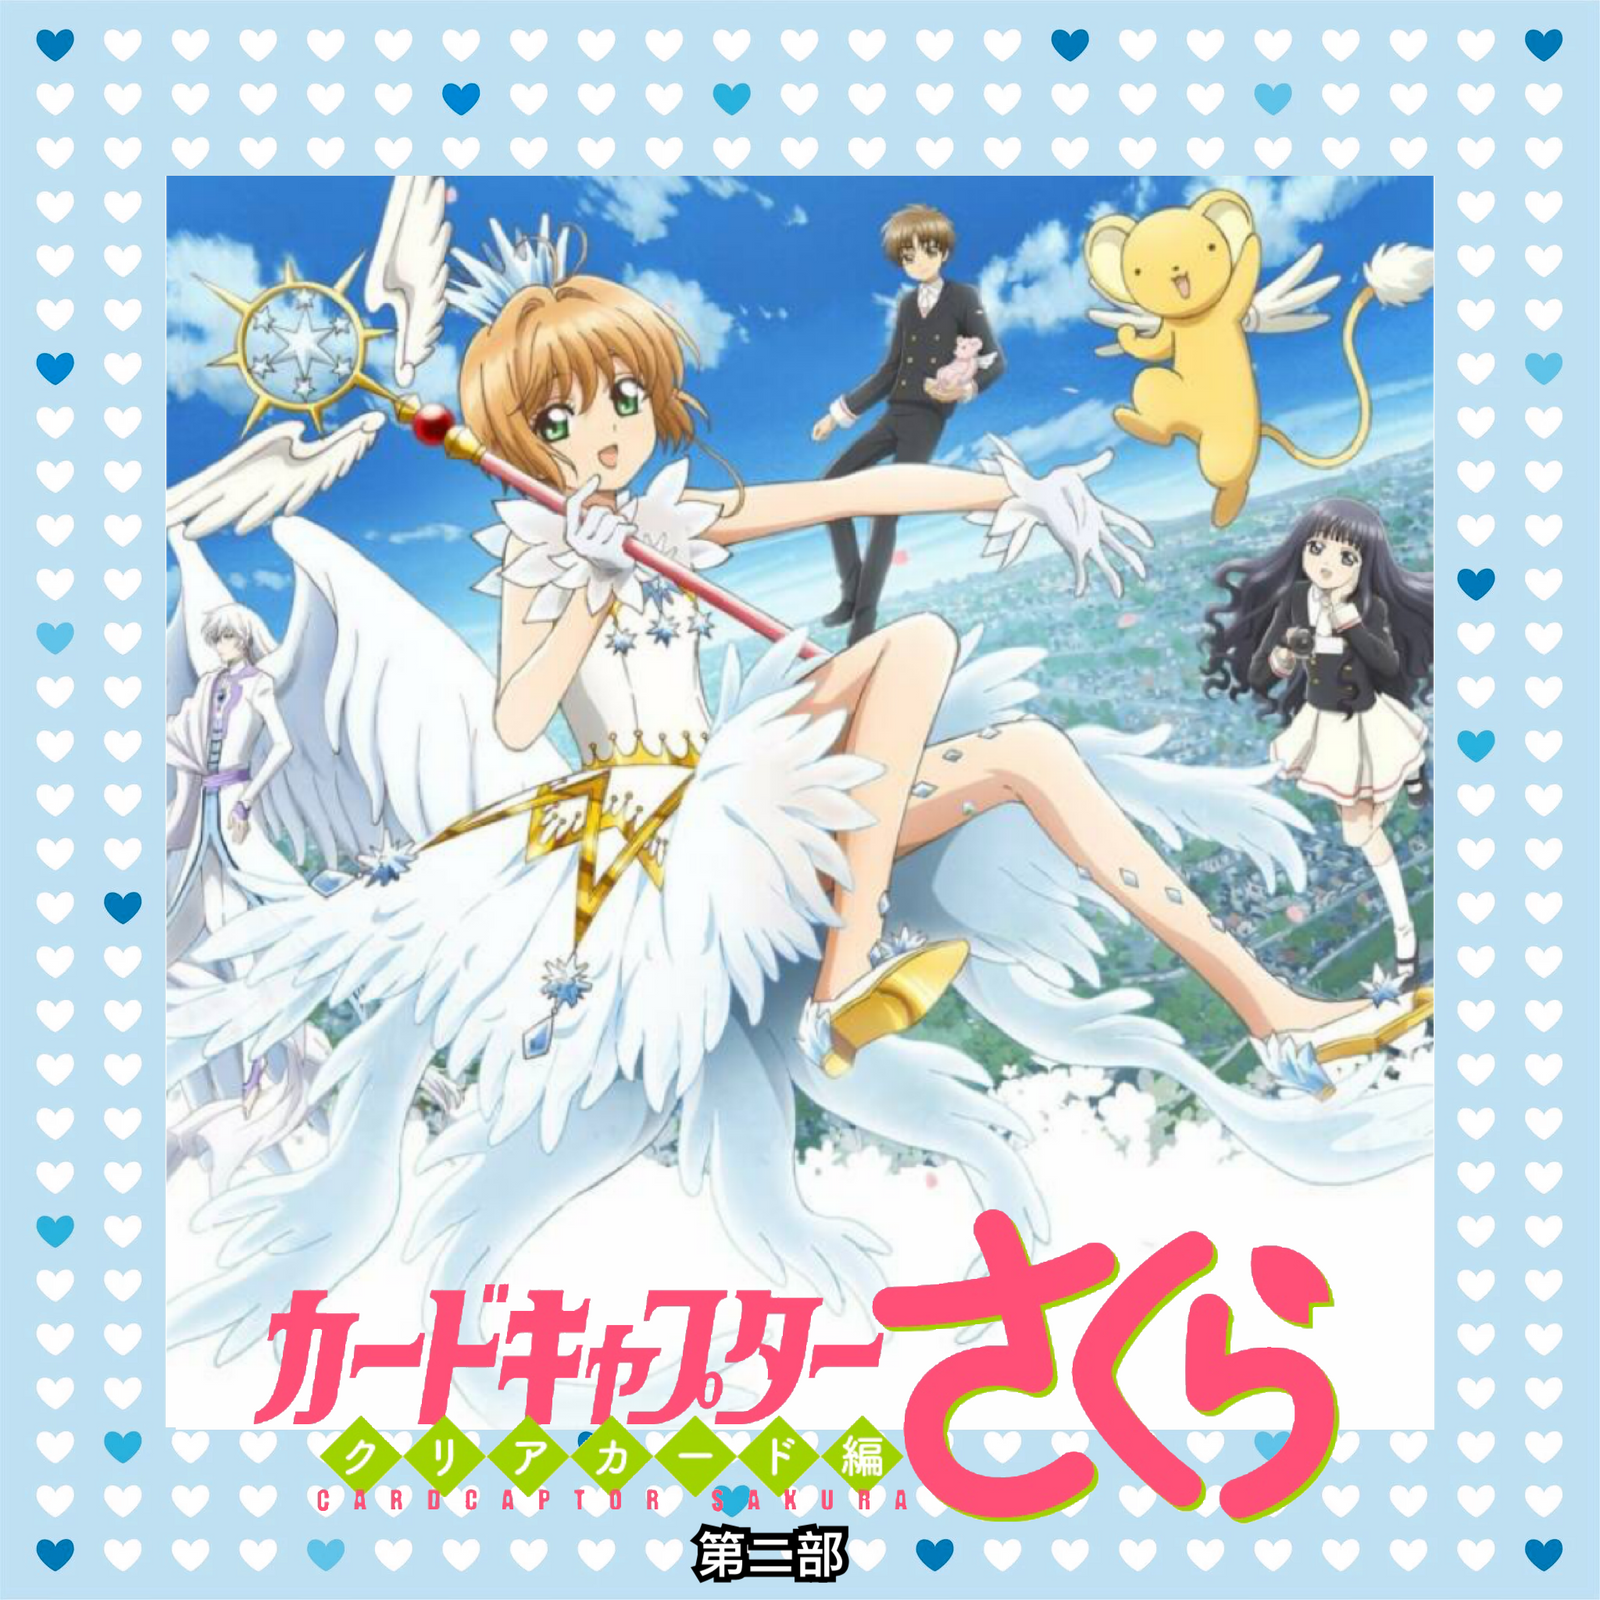 Card Captor Sakura Clear Card Vol.2 First specification version [DVD]